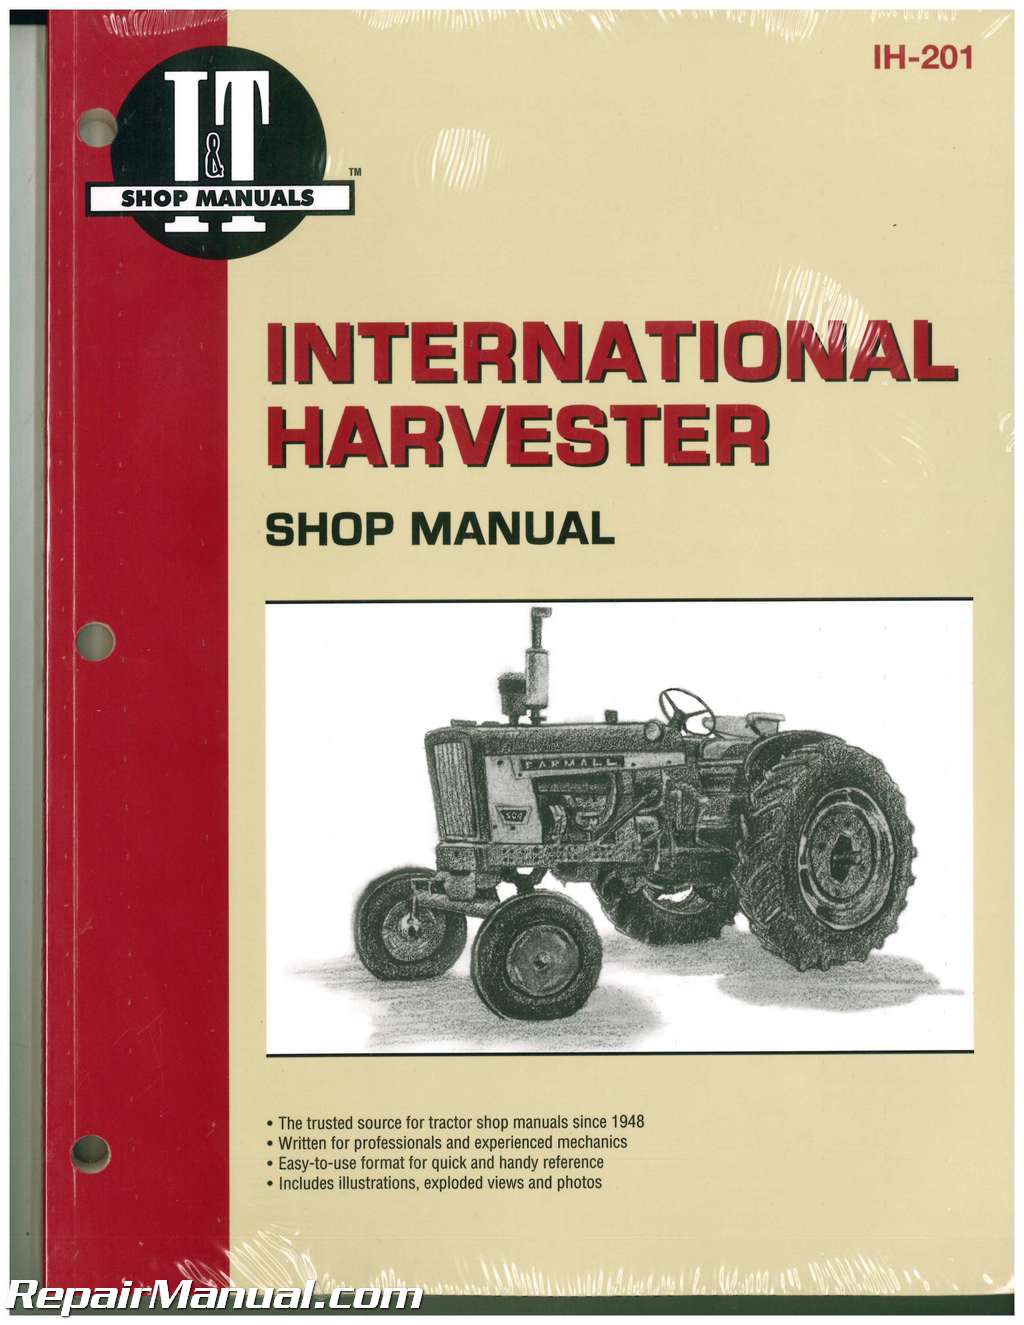 International harvester 140 parts manual download pdf